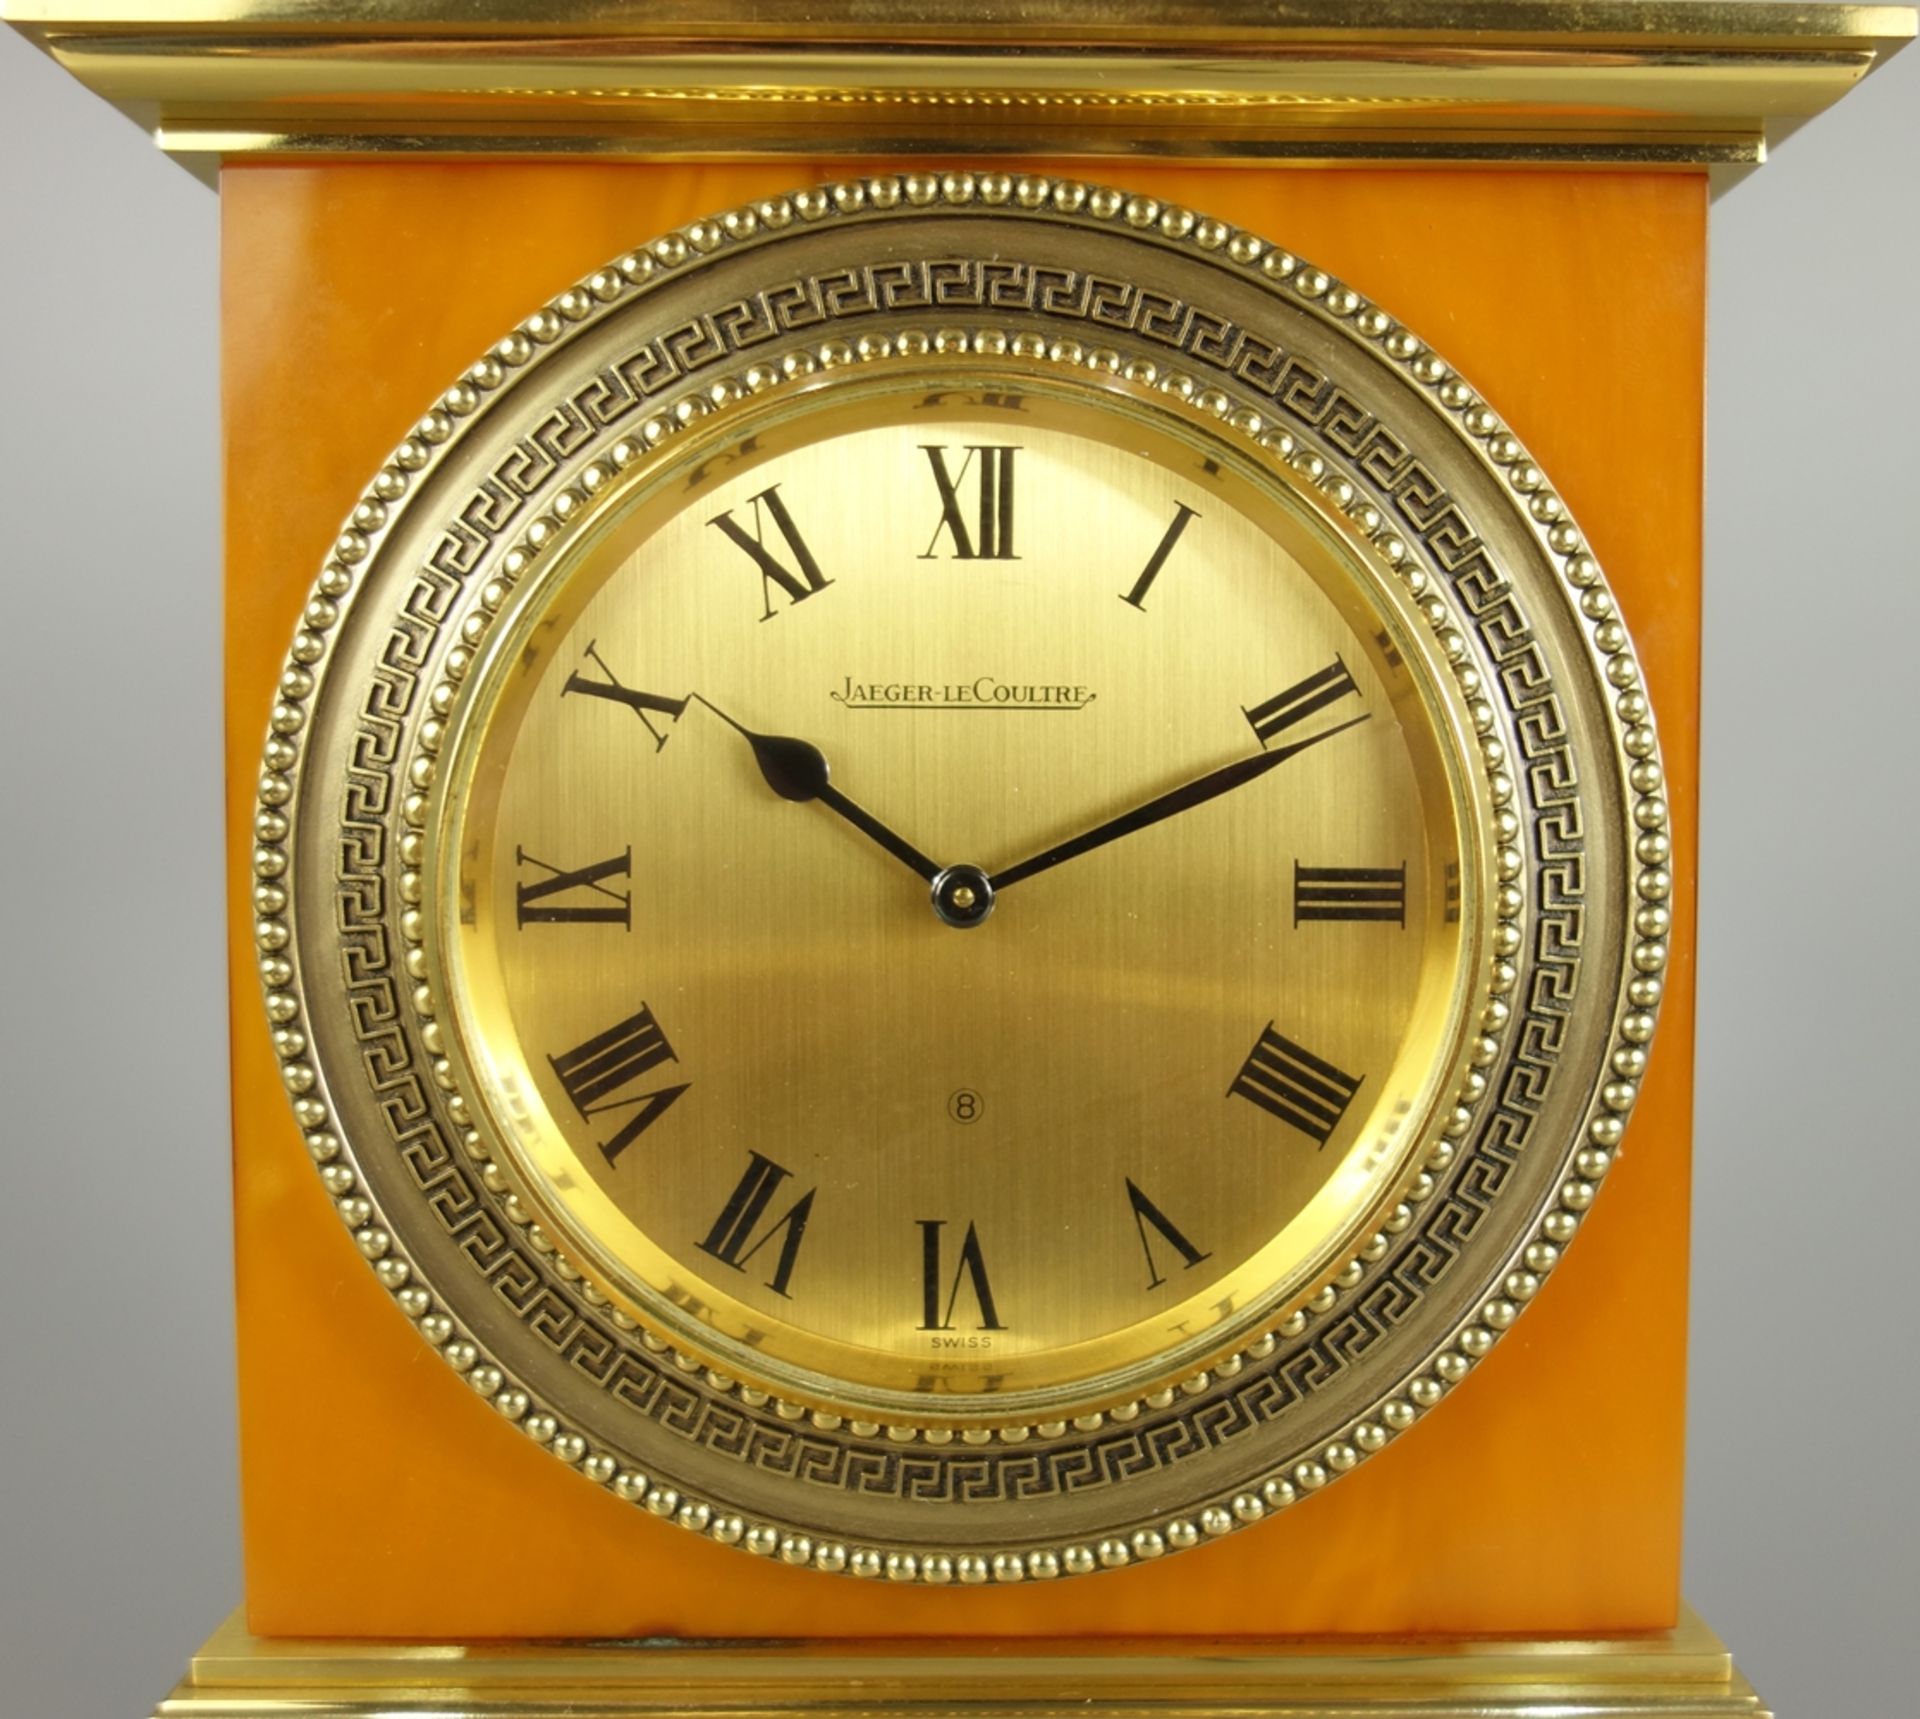 Tischuhr, Jaeger-LeCoultre, 8-Tage-Uhr im Empirestil, um 1968-70, Nr. 496, HBT:18,7*14,2*6,3cm, - Bild 2 aus 4